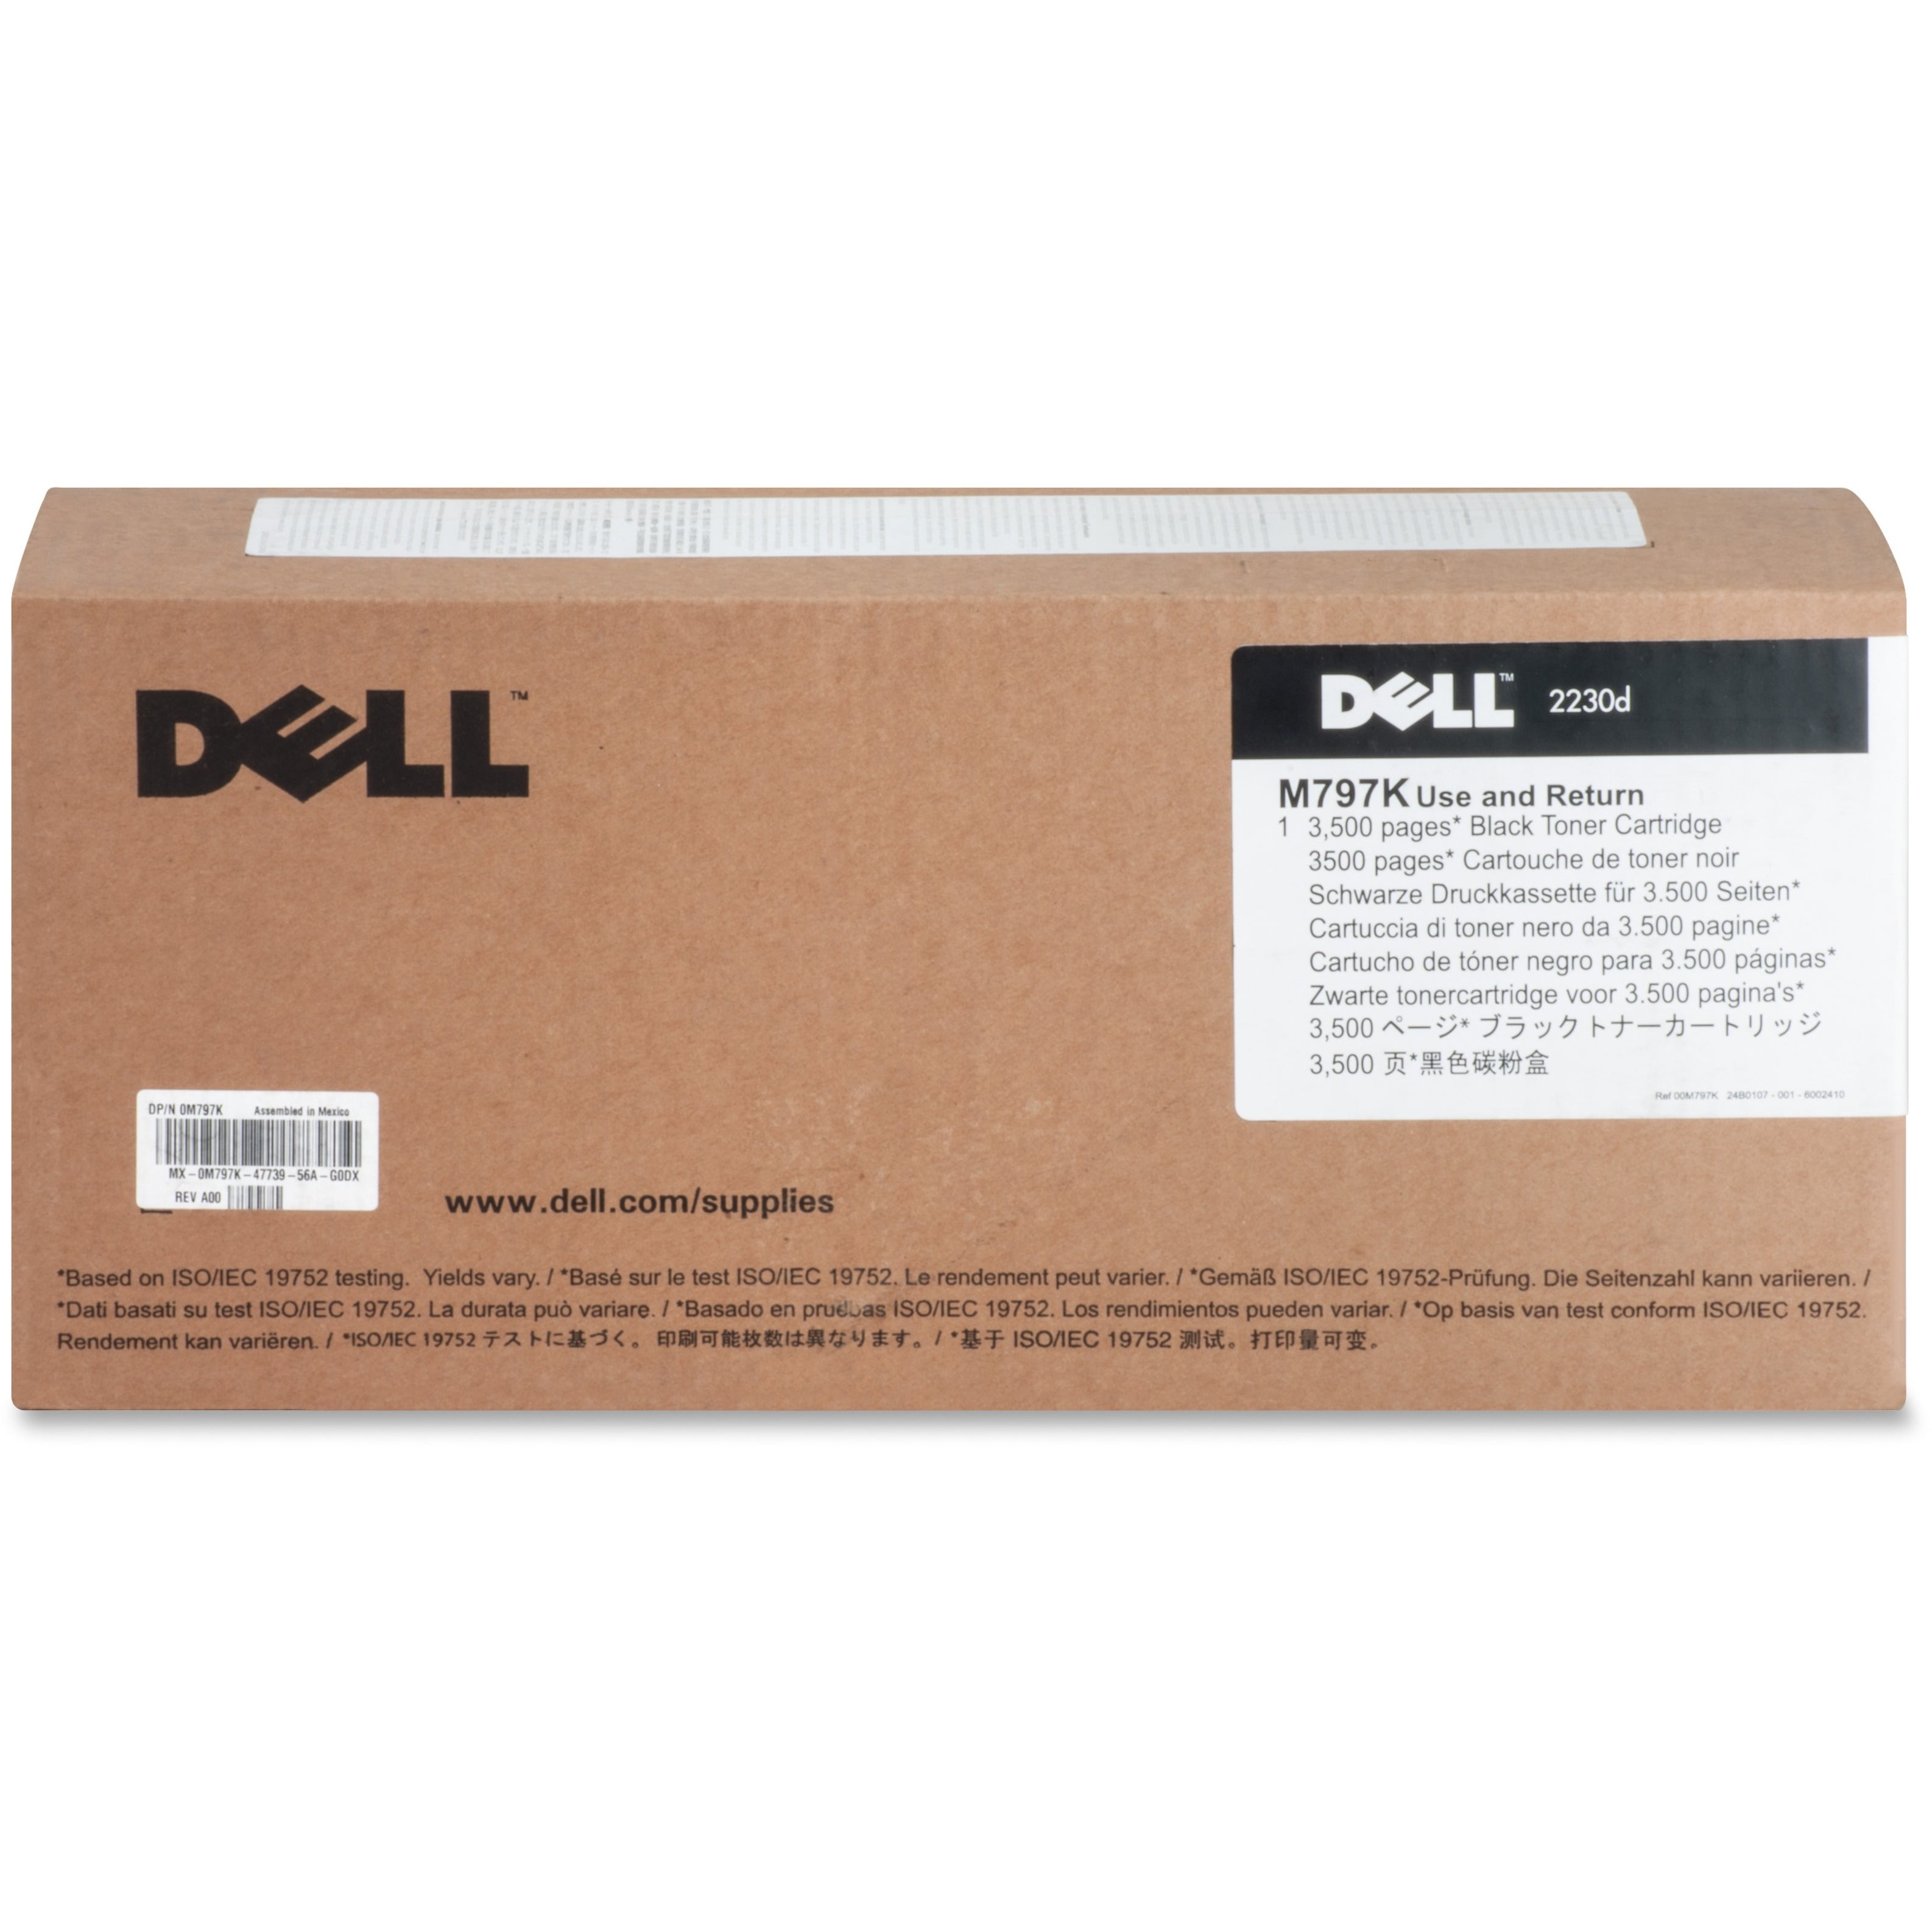 Dell, DLLM797K, 2230d Laser Printers Toner Cartridge, 1 / Each